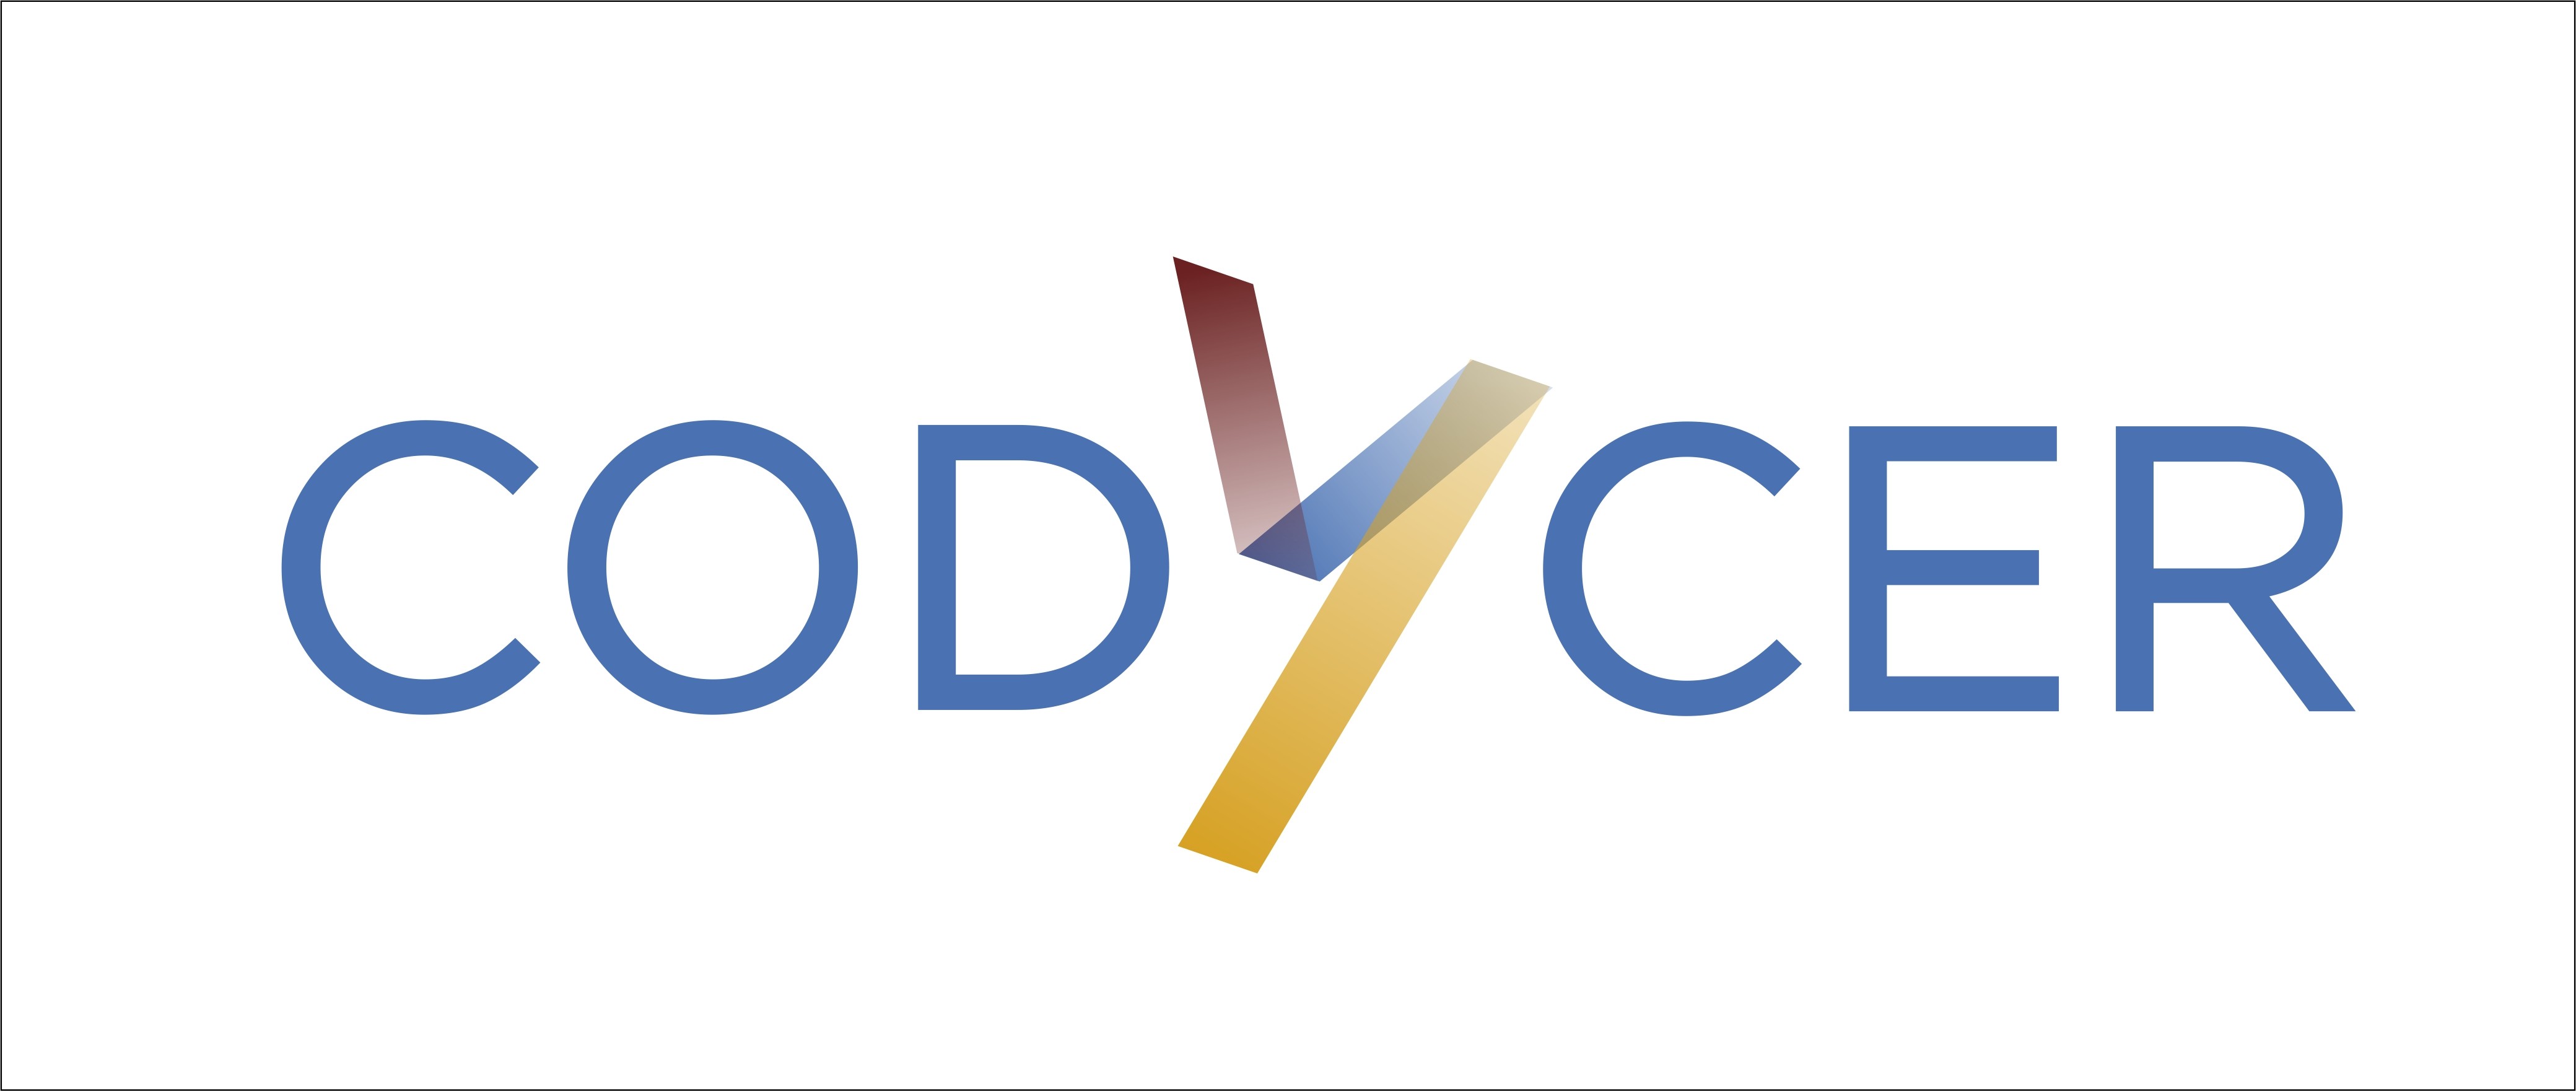 CODYCER logo